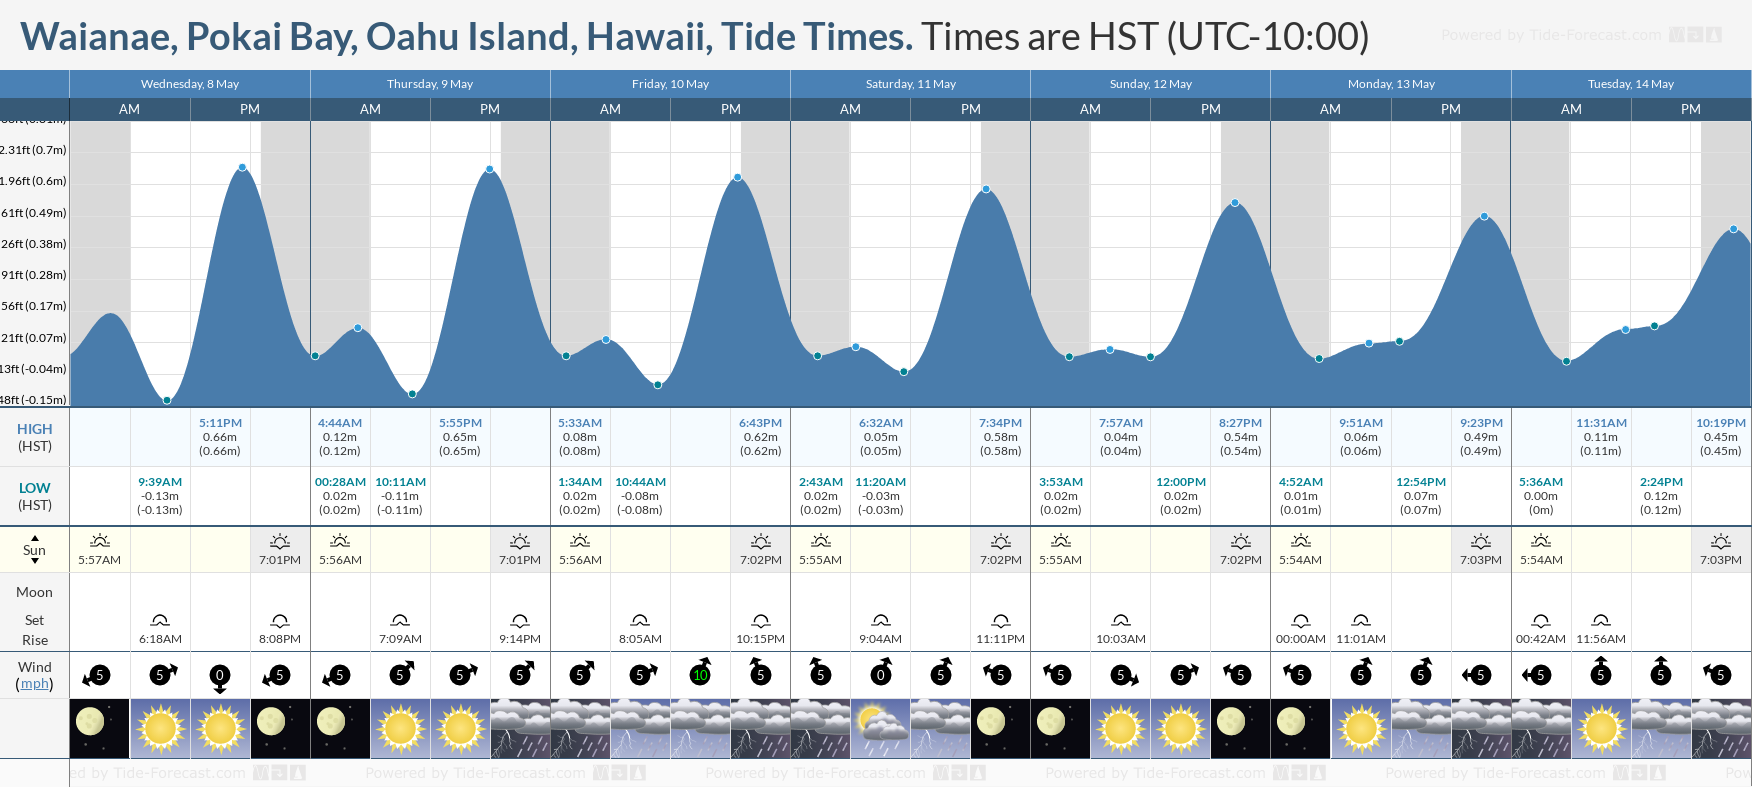 Waianae, Pokai Bay, Oahu Island, Hawaii Tide Chart including high and low tide times for the next 7 days